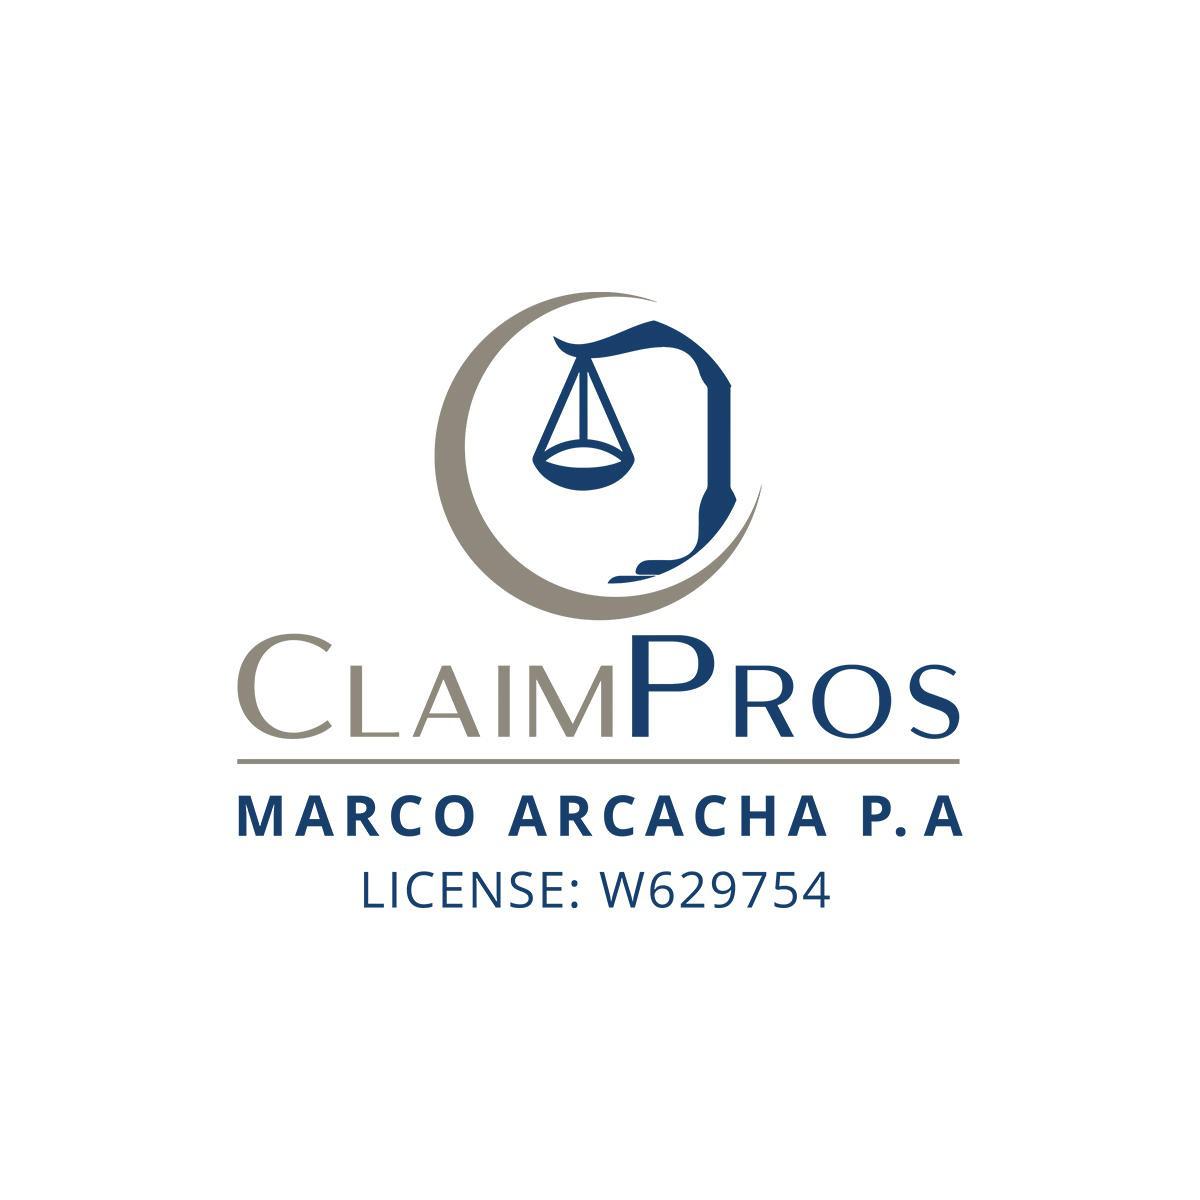 Marco Arcacha - Claim Pros Public Adjuster